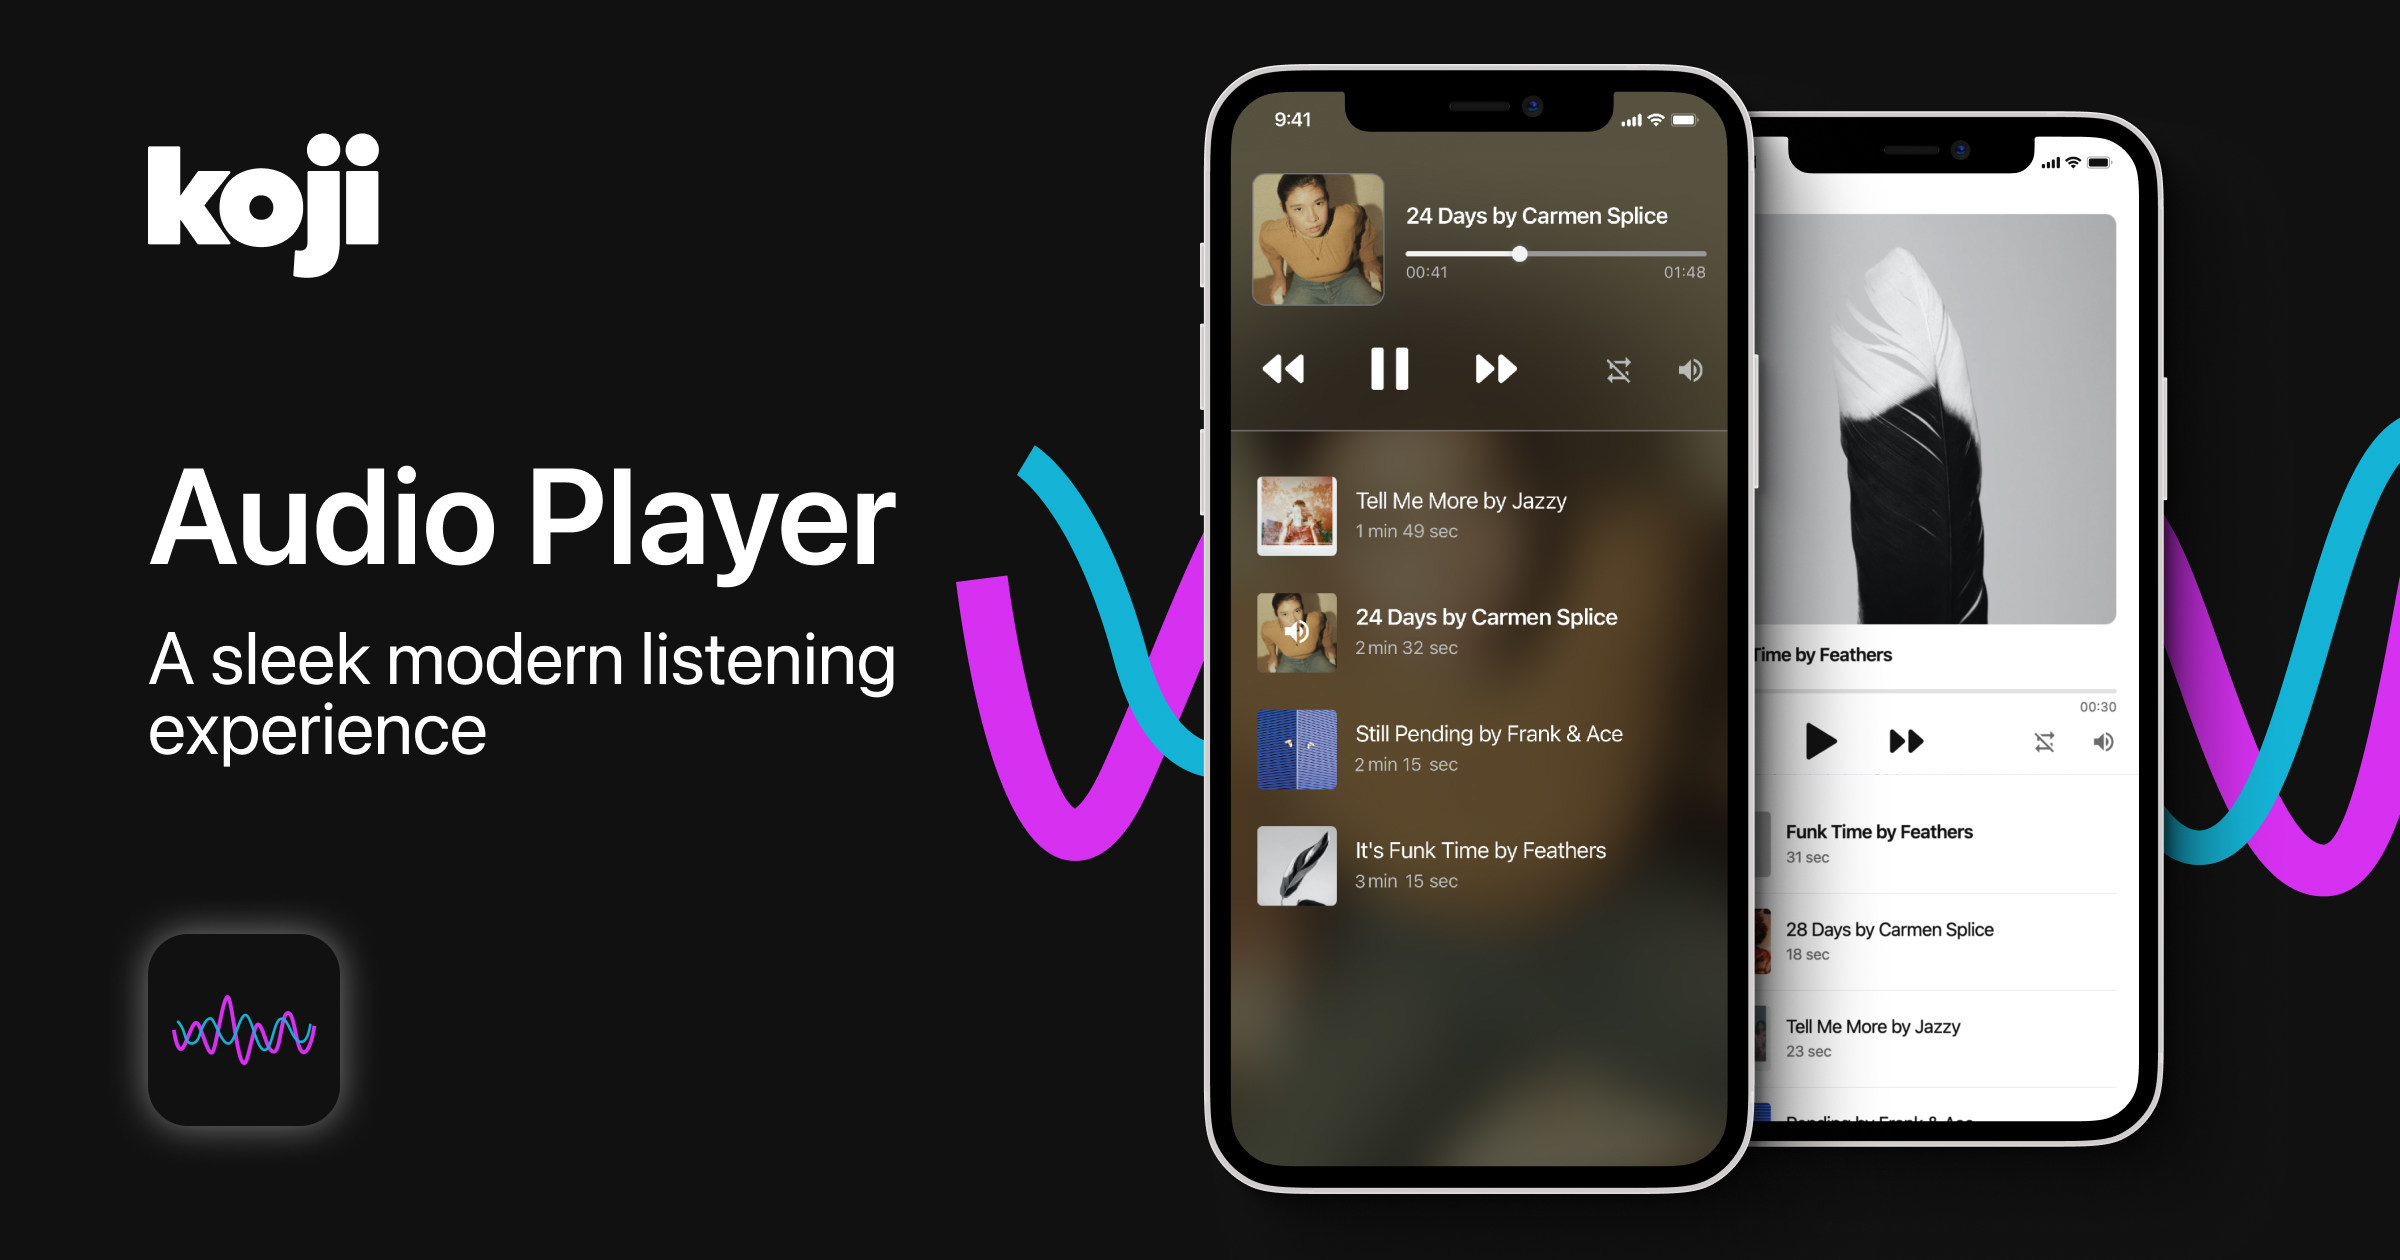 Creator Economy Platform Koji Announces “Audio Player” App